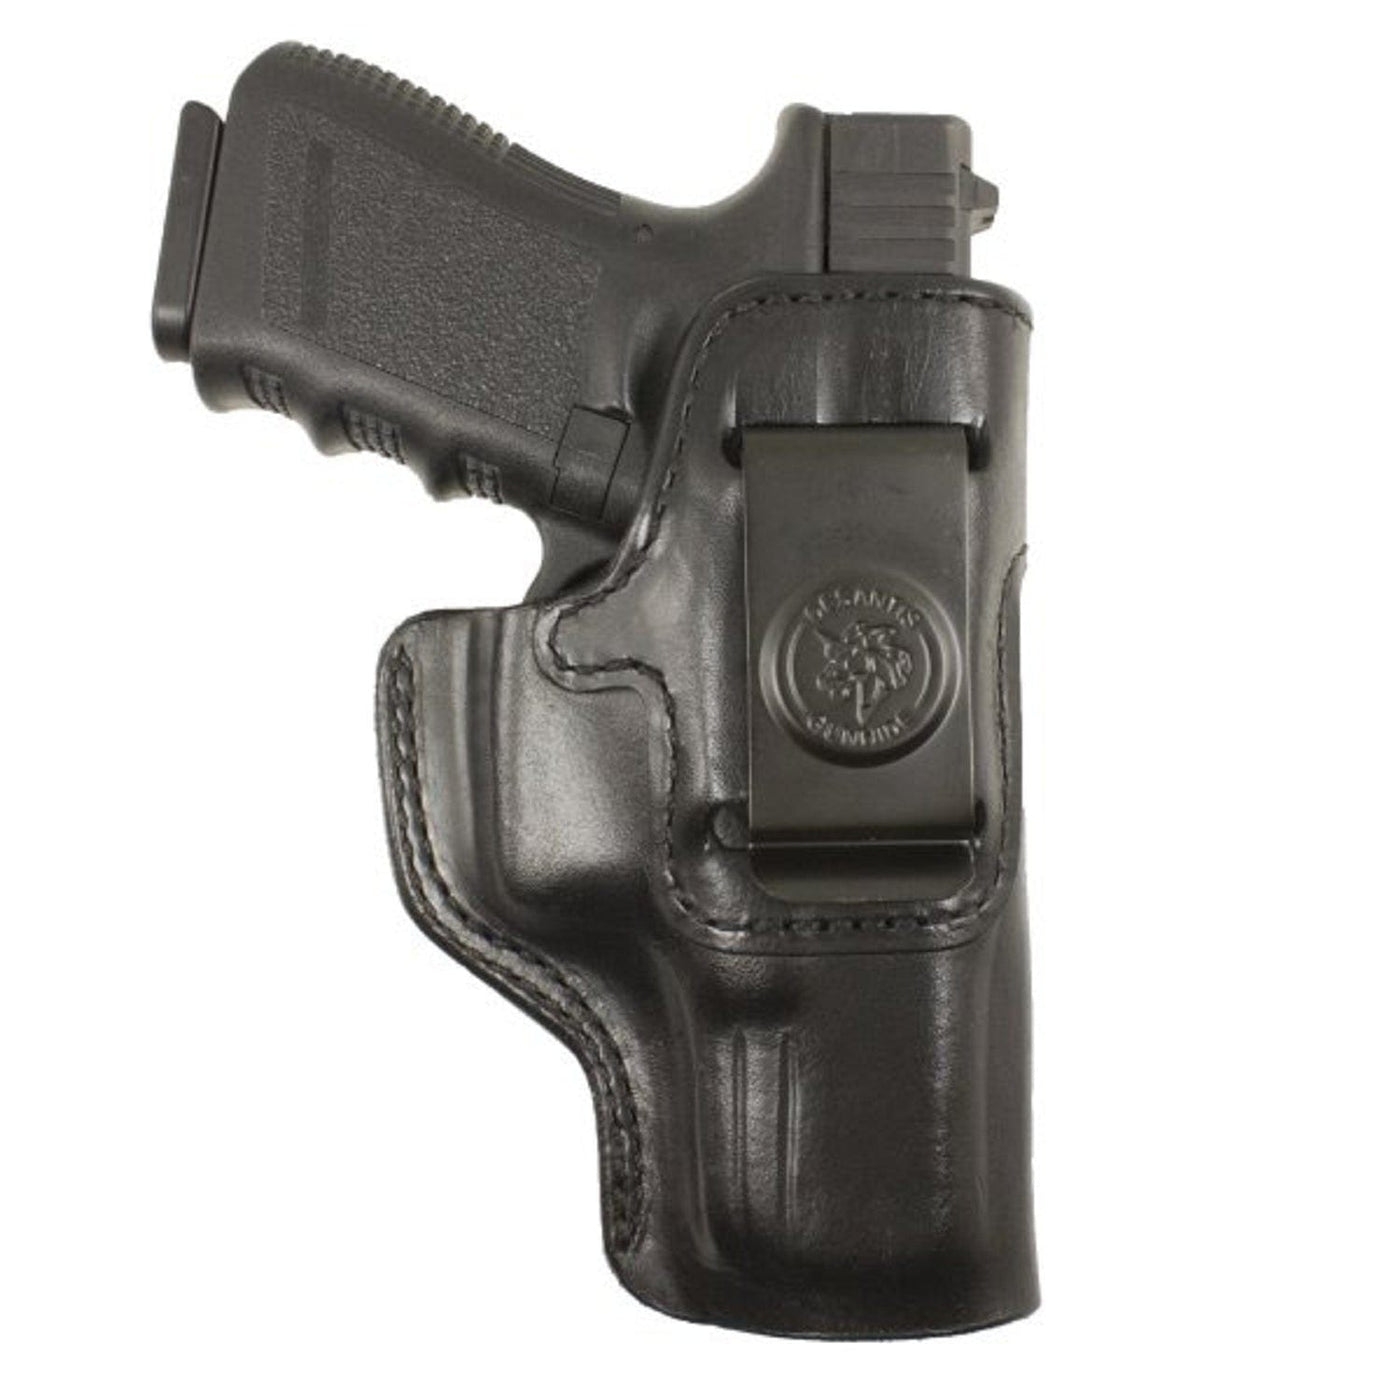 DeSantis DeSantis Inside Heat Holder for Glock 43 Right Hand - Black Shooting